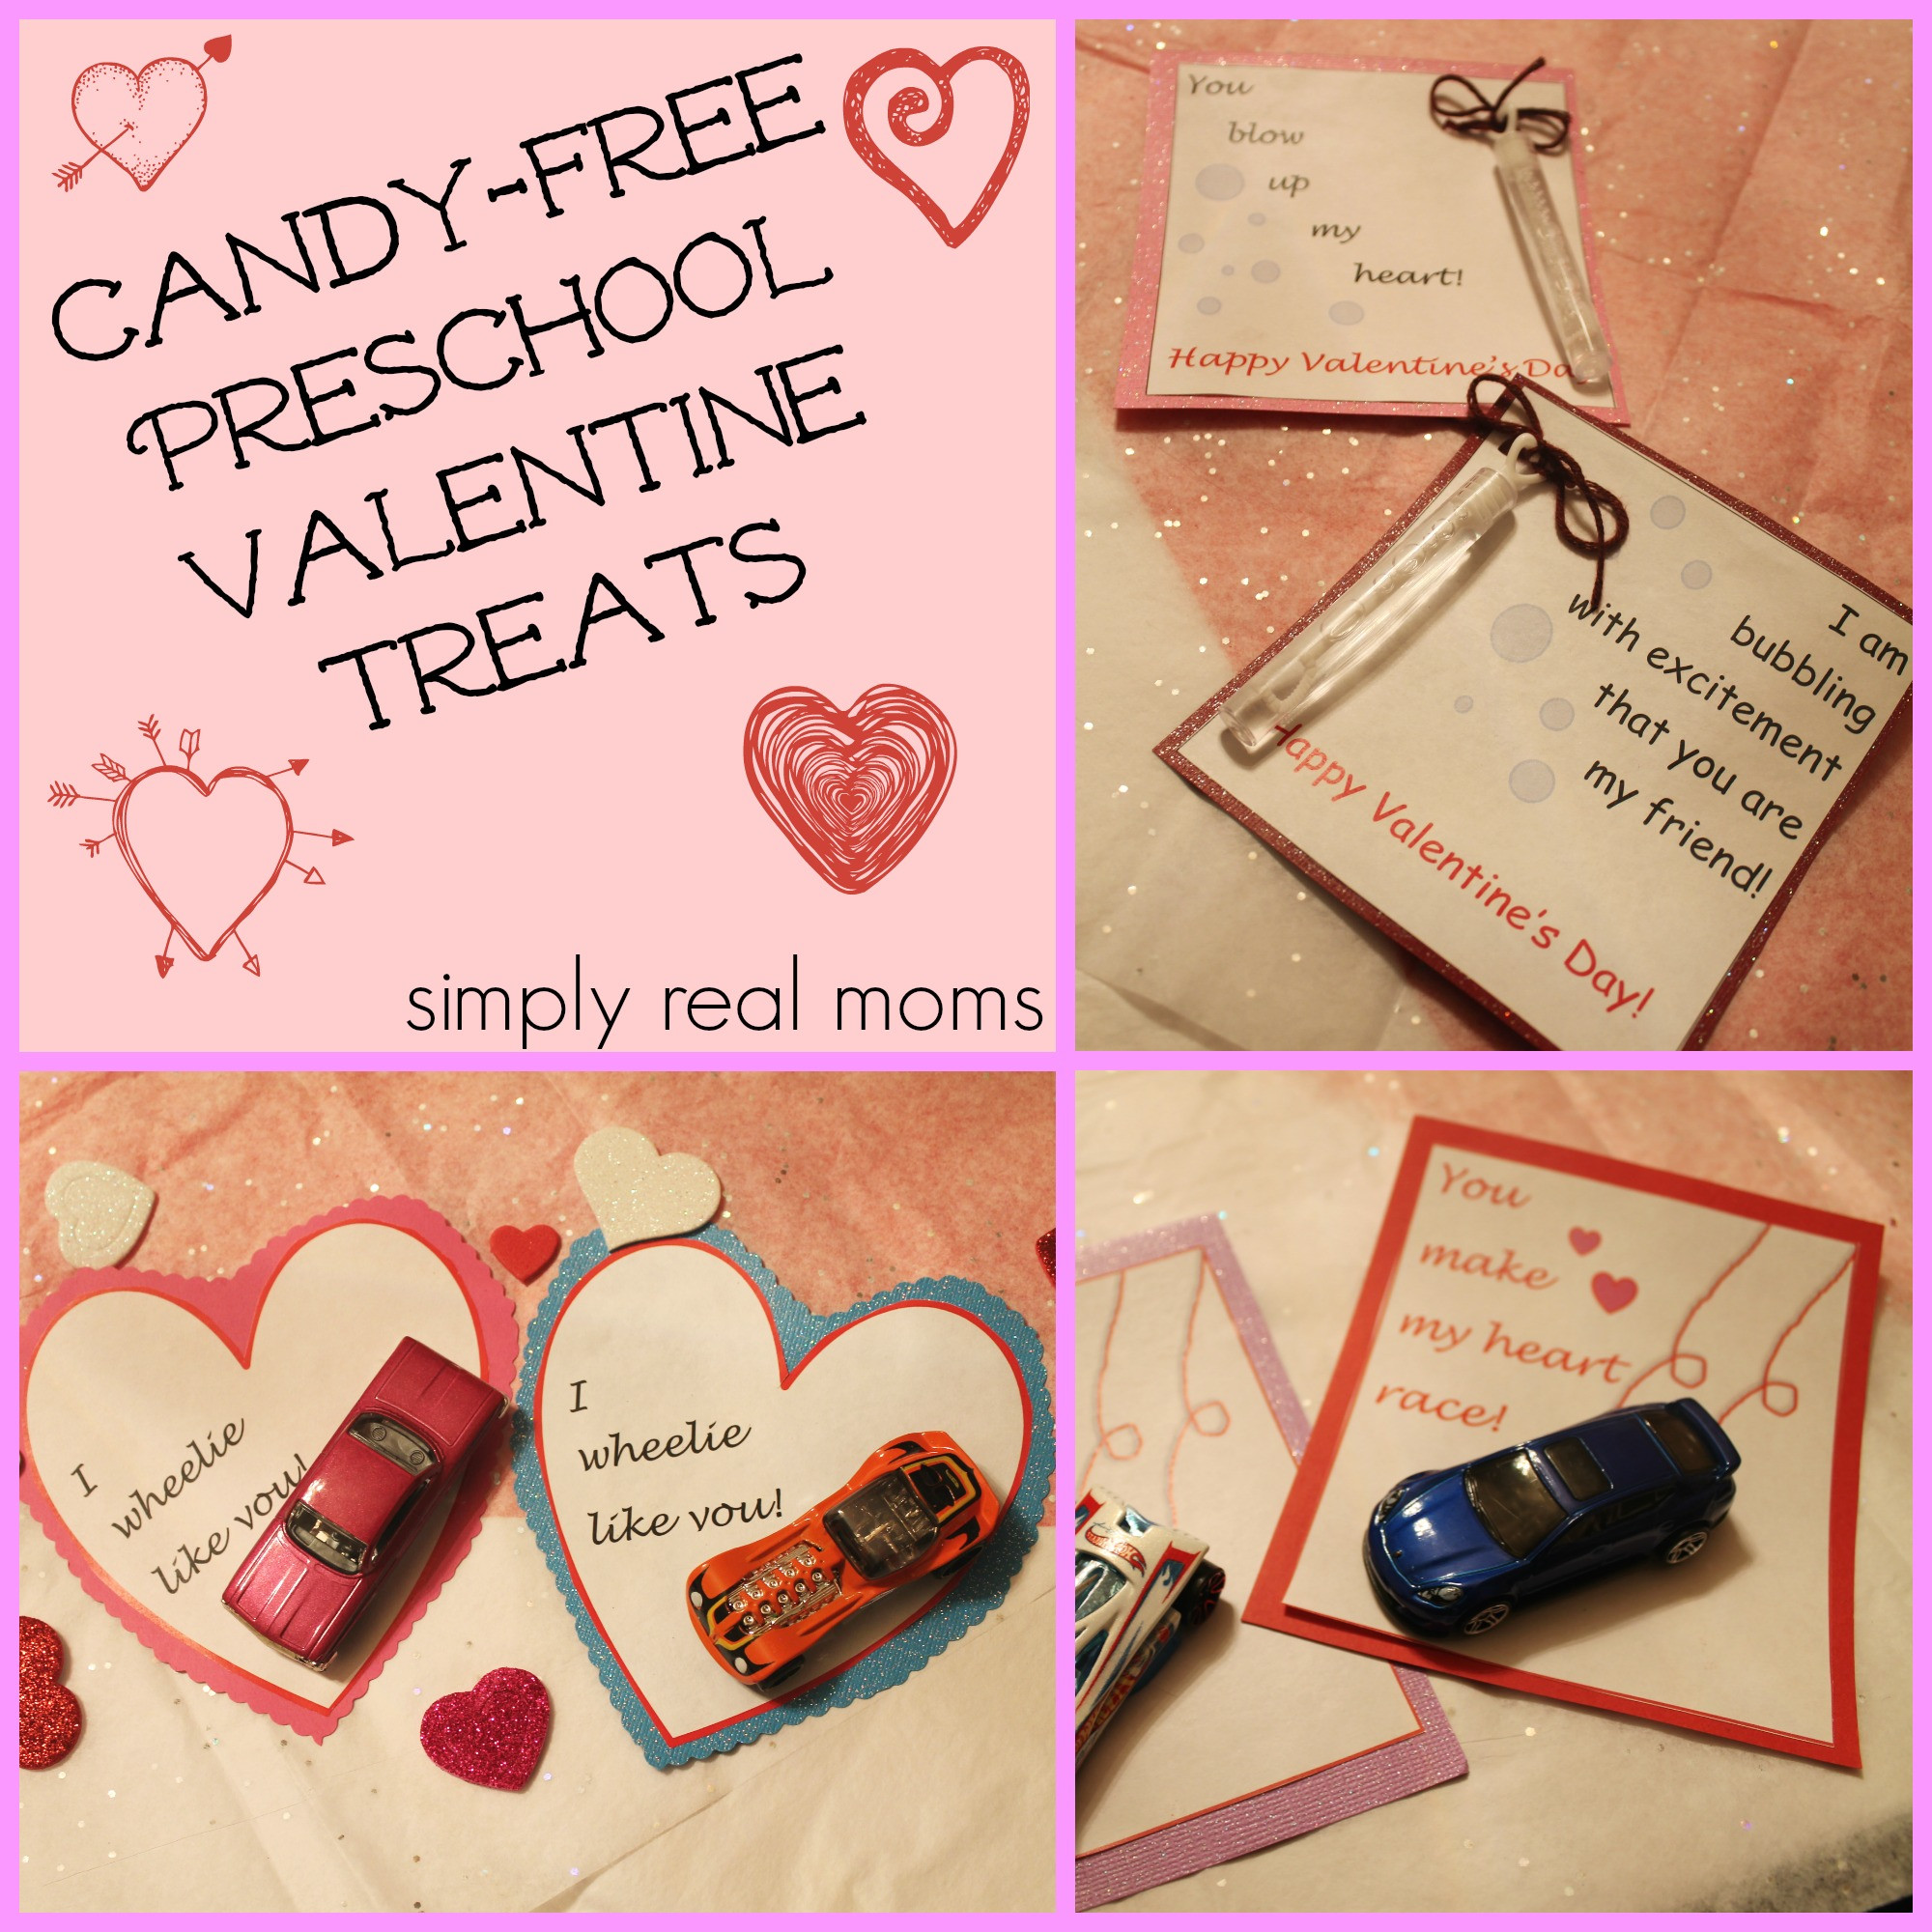 Valentines Day Ideas For Preschoolers
 Candy Free Preschool Valentine Treats